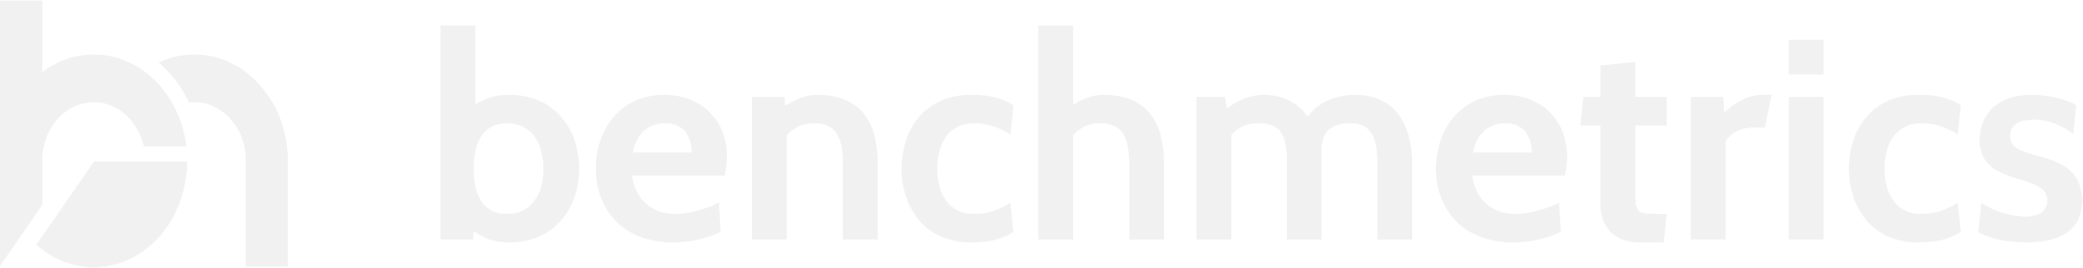 Benchmetrics logo